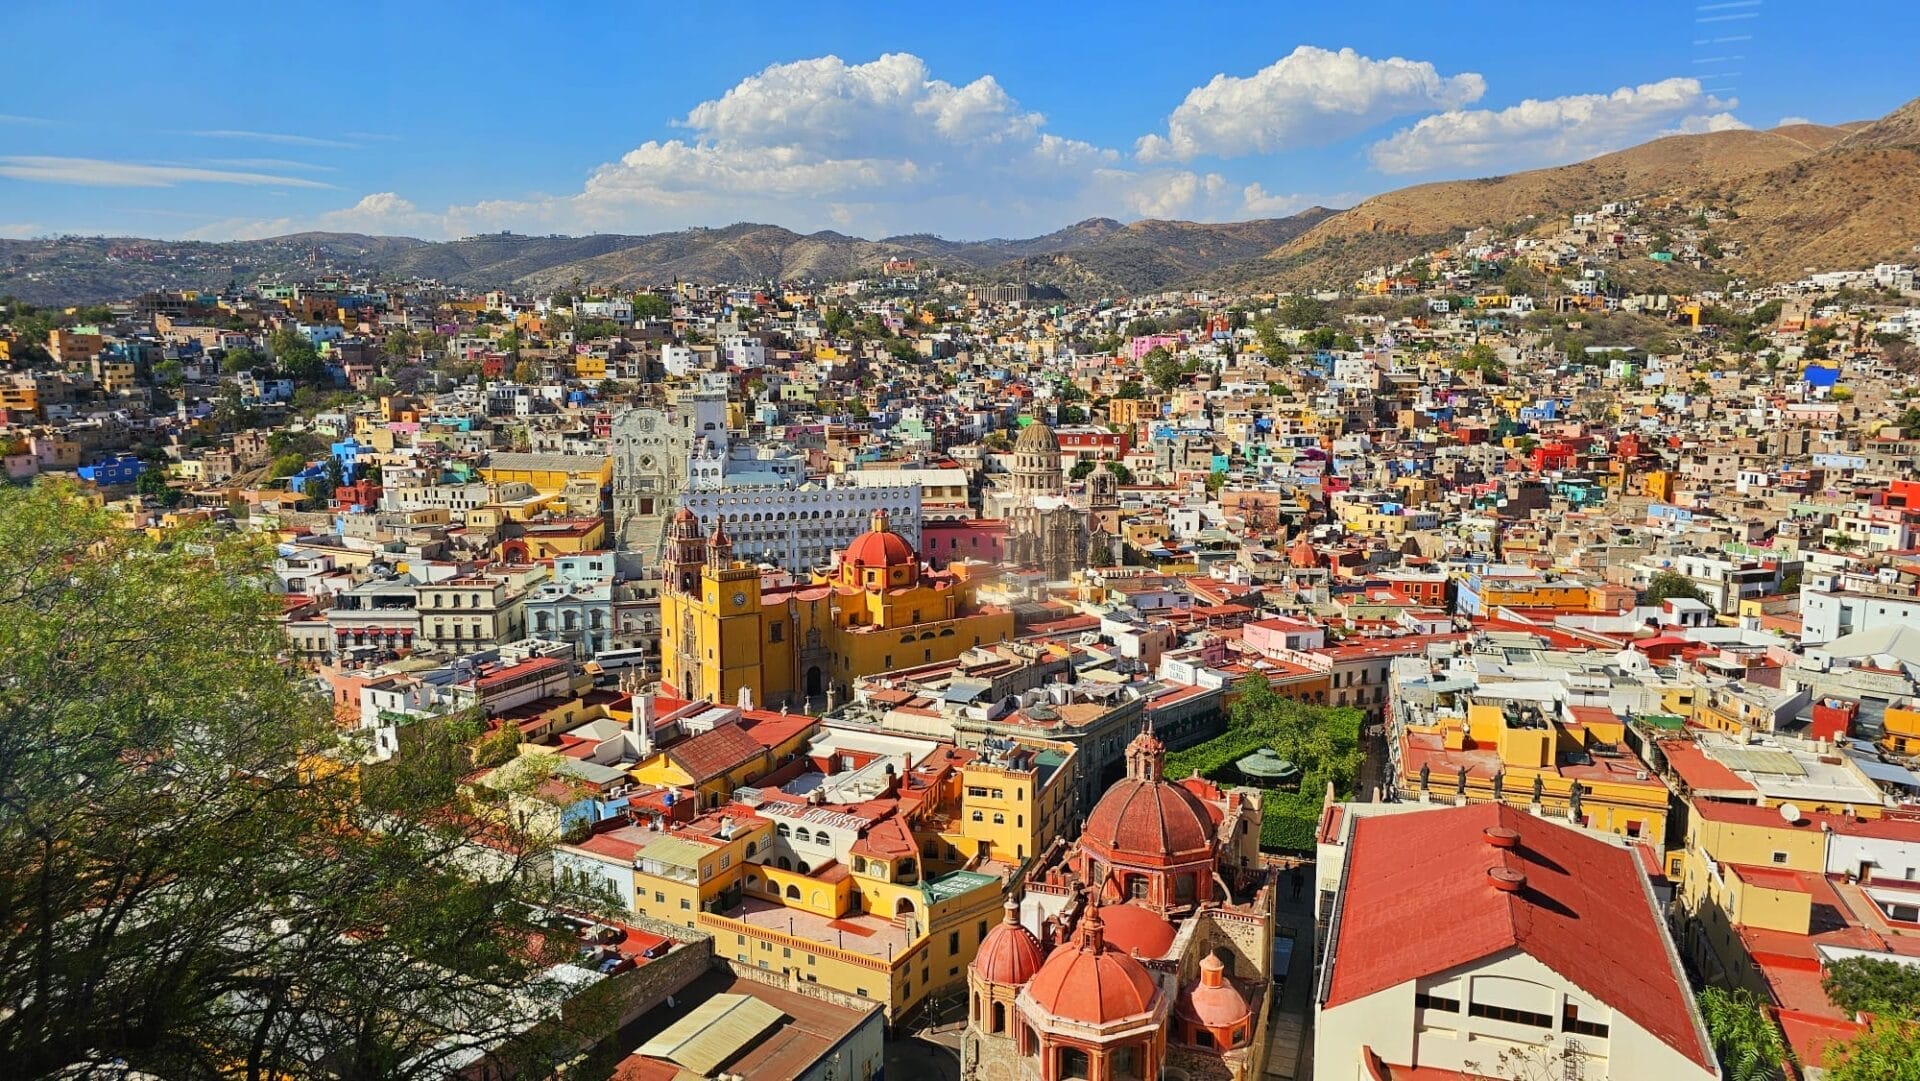 Guanajuato city aerial view - unique compared to San Miguel